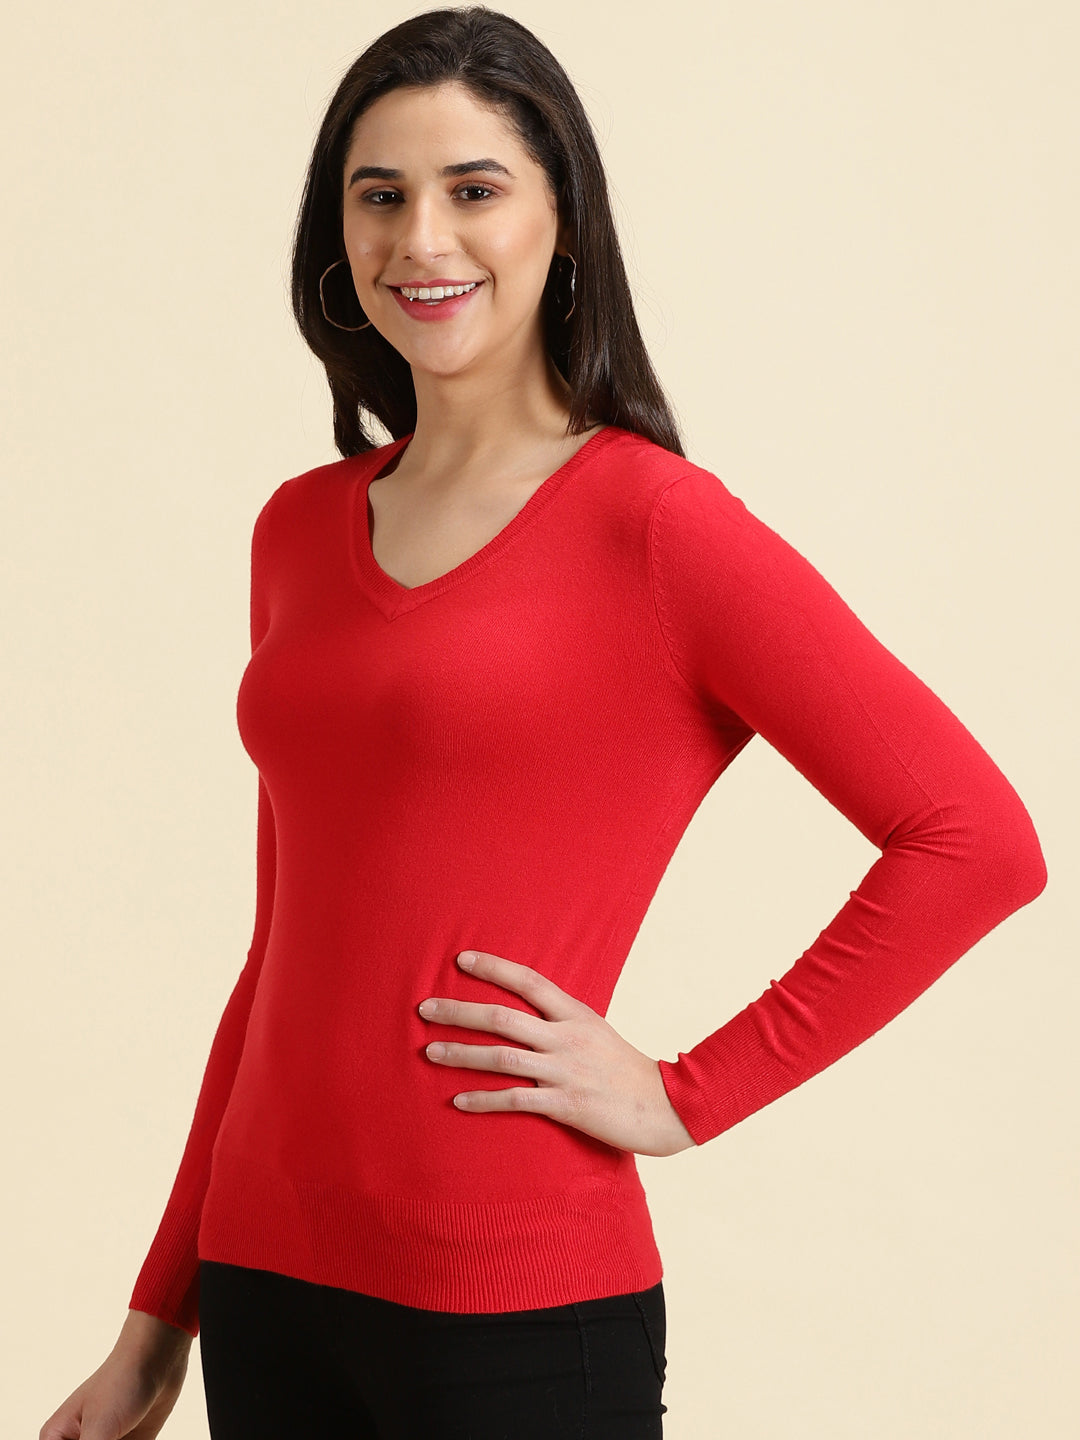 Women's Red Solid Top